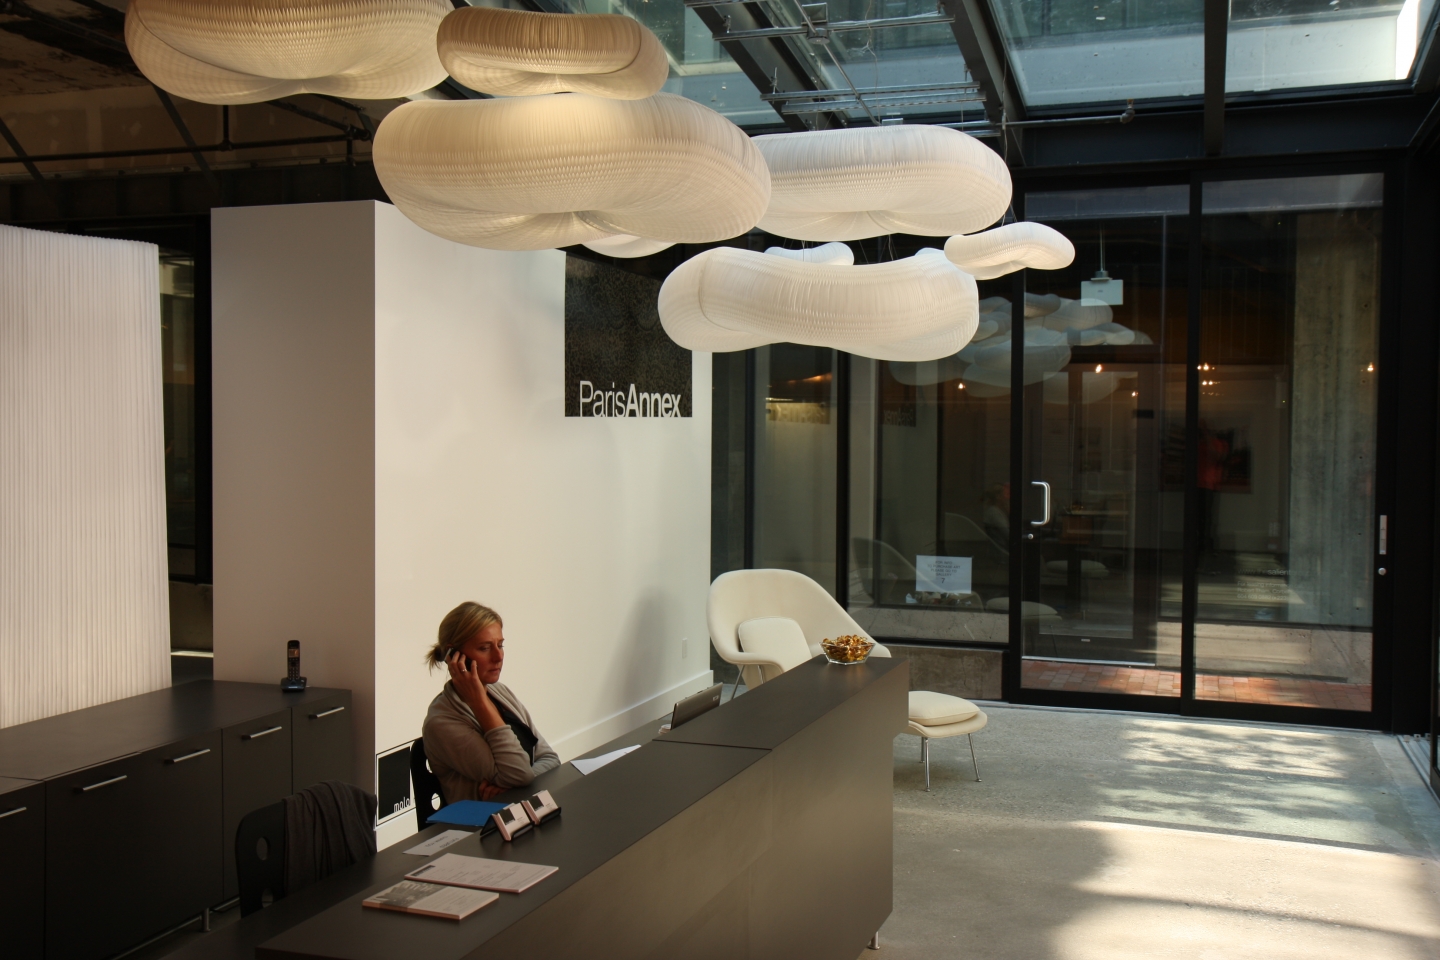 molo cloud light pendants at the Paris Annex in Vancouver, Canada